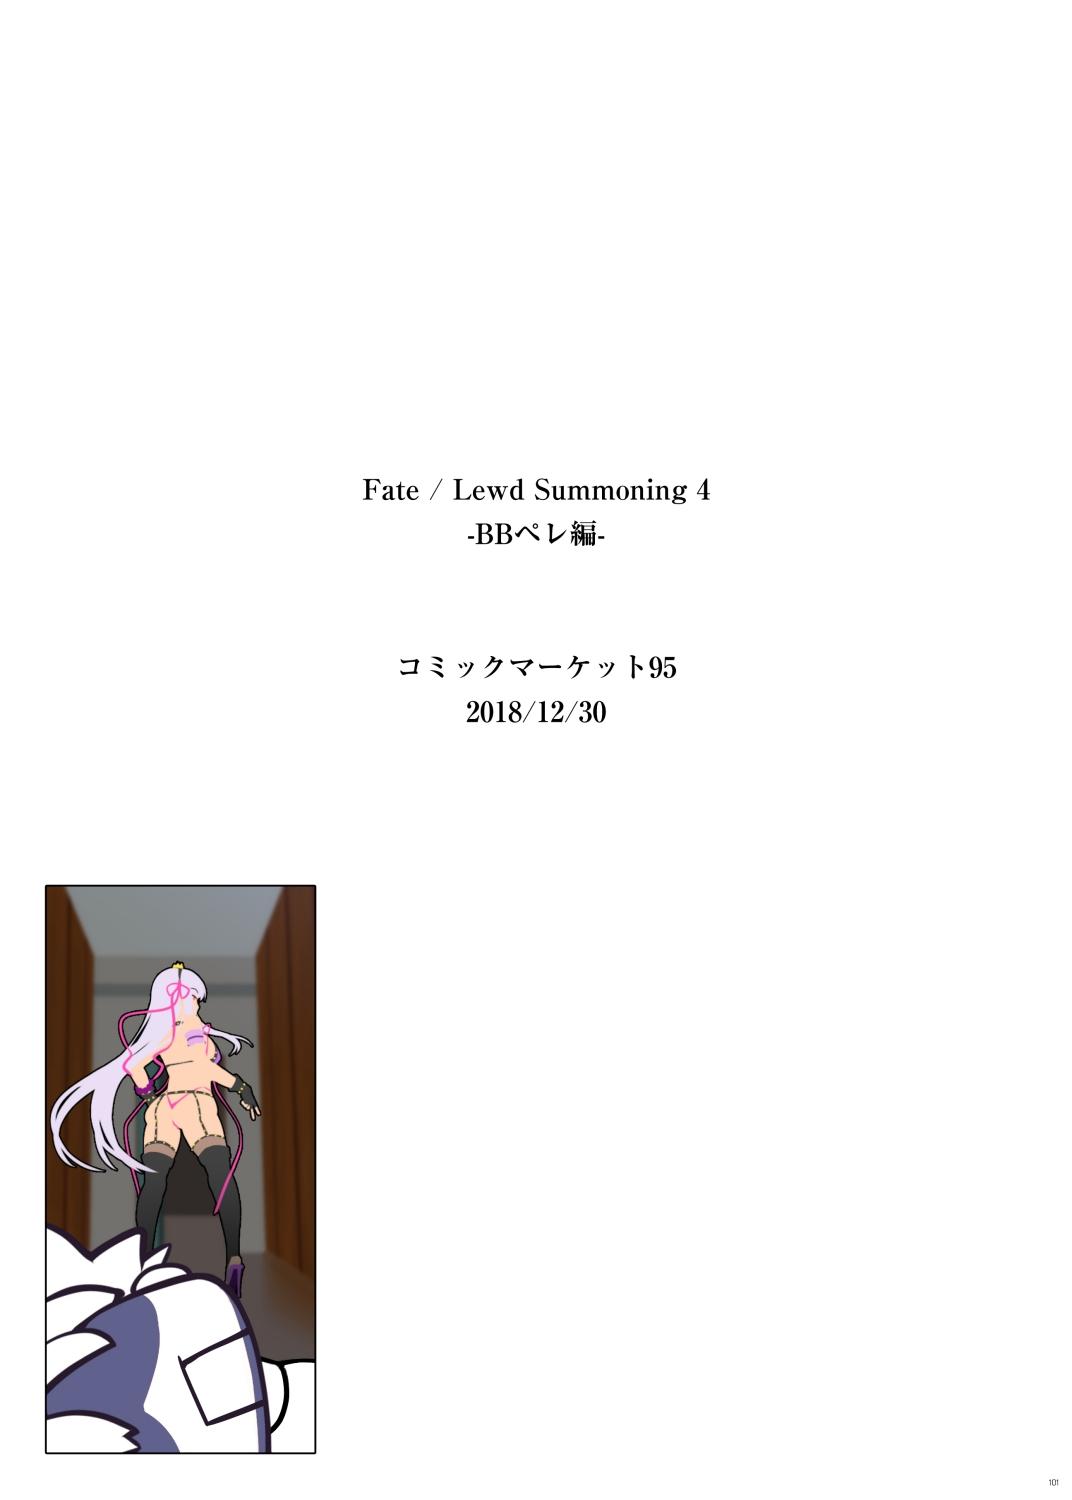 Fate/Lewd Summoning 89